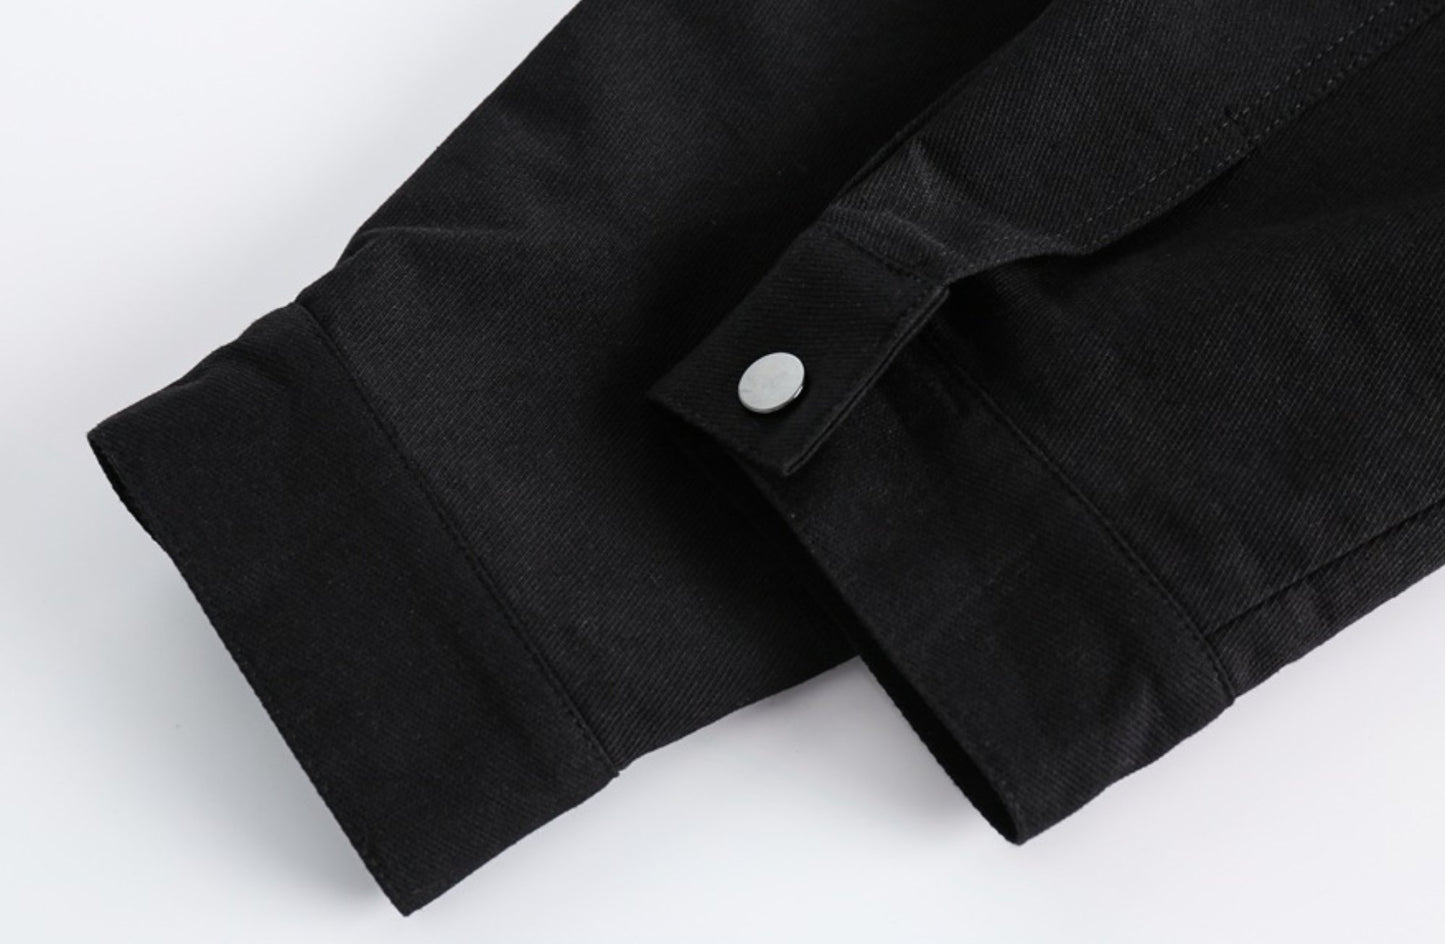 Stylish Dark Rivet Retro Cotton Jacket